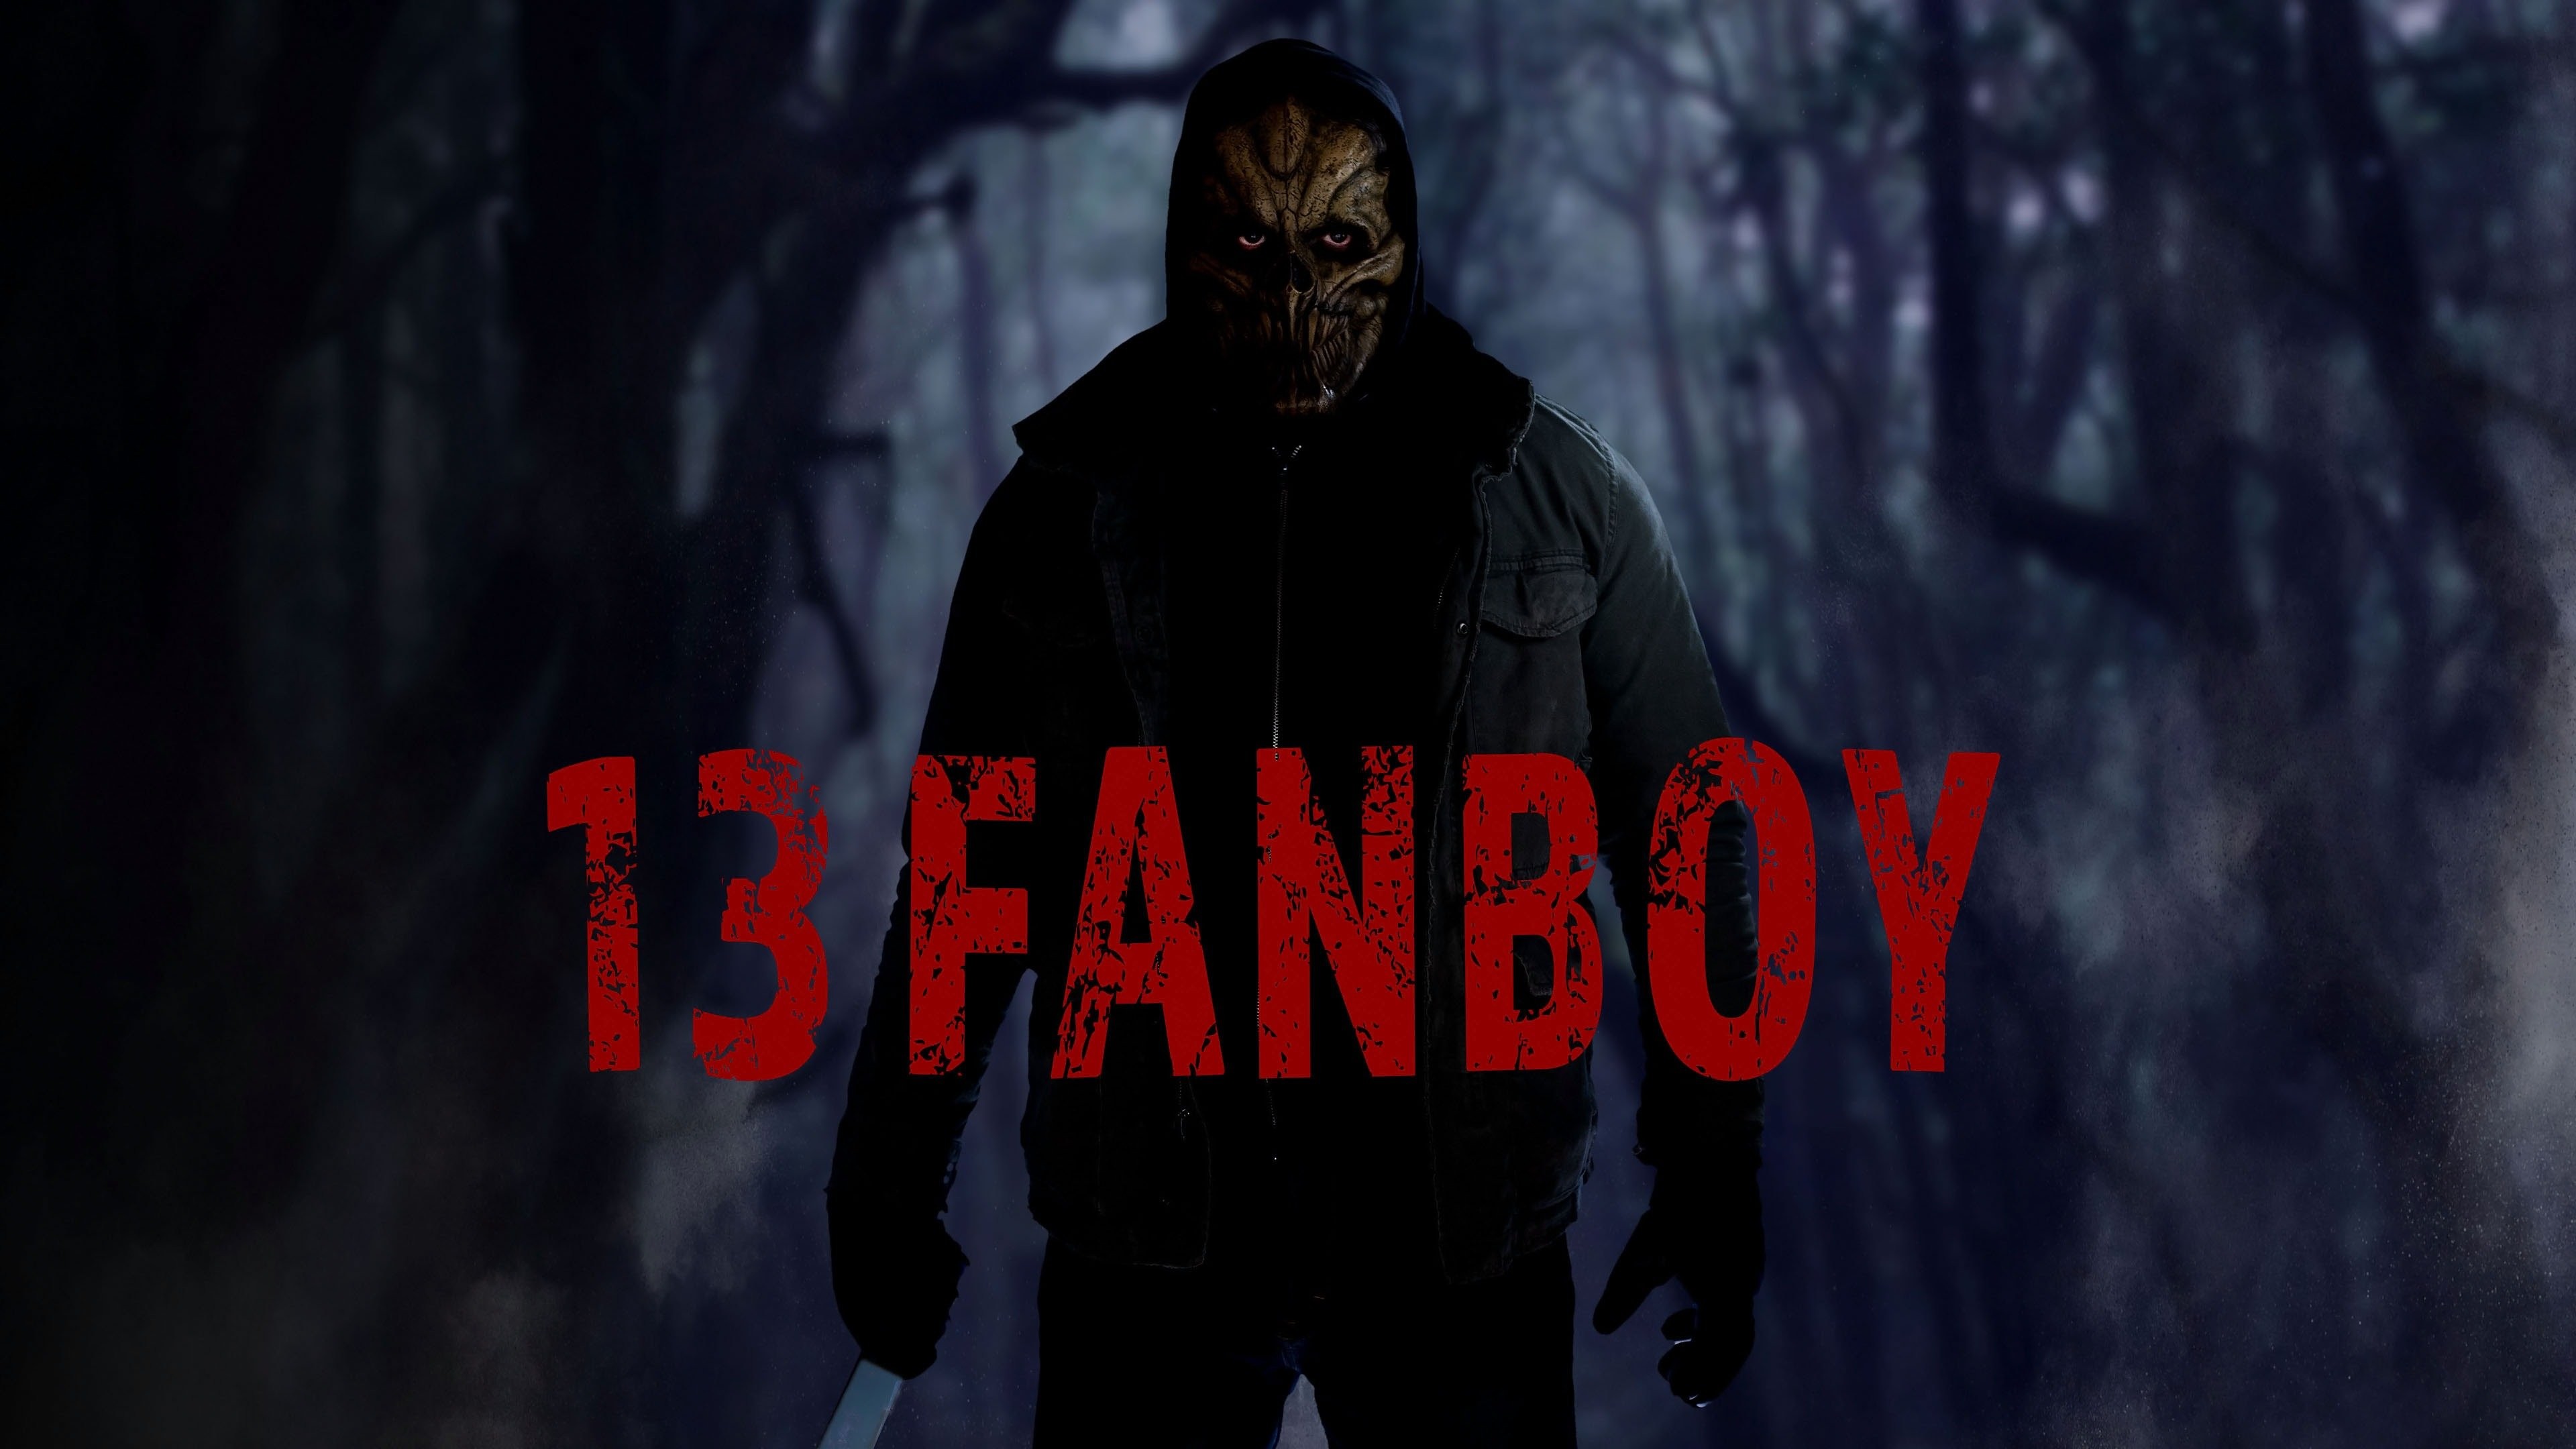 13 Fanboy (2021) - IMDb